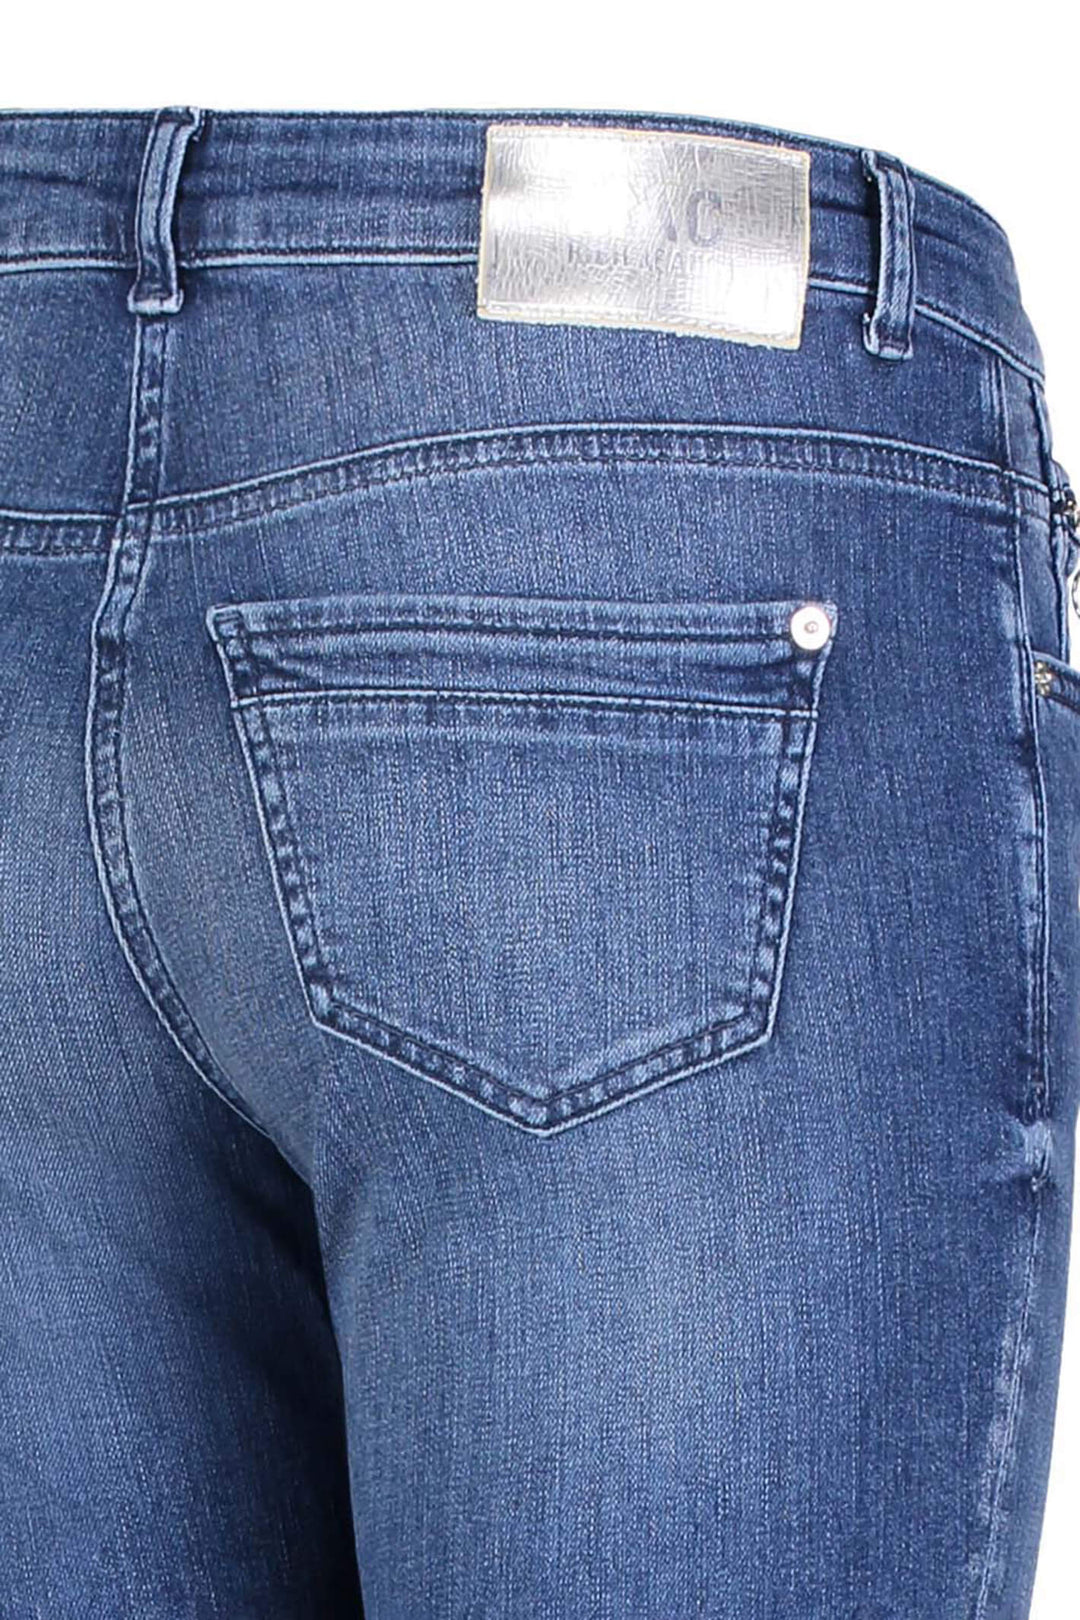 Mac 5755-90-D604 Rich Slim Chic Denim Raw Edge Jeans